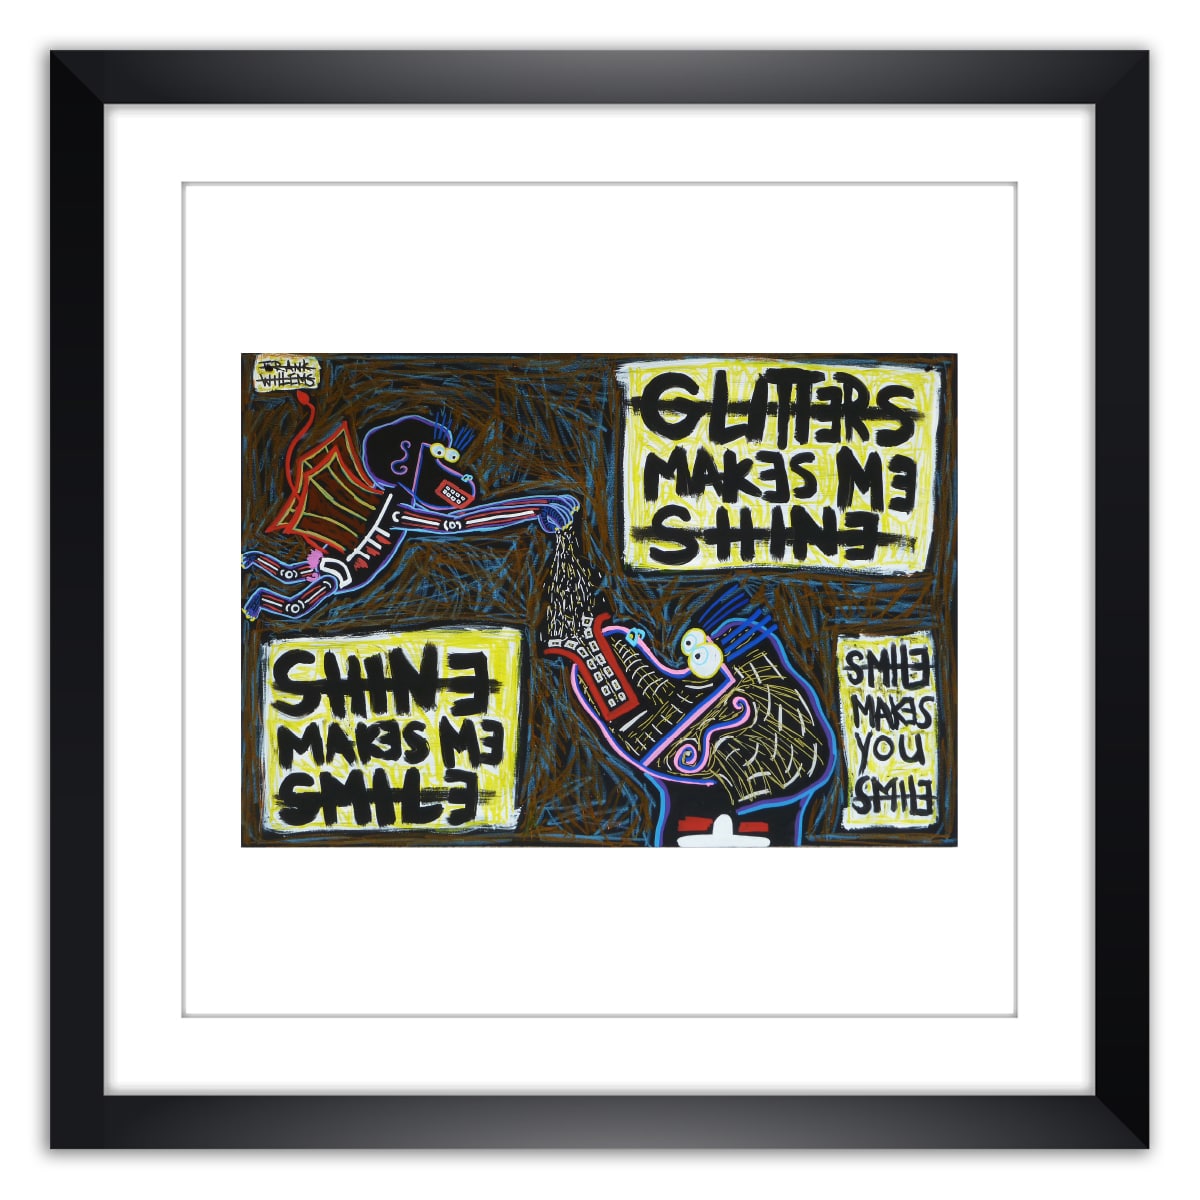 Limited prints - GLITTER AND SHINE framed - Frank Willems